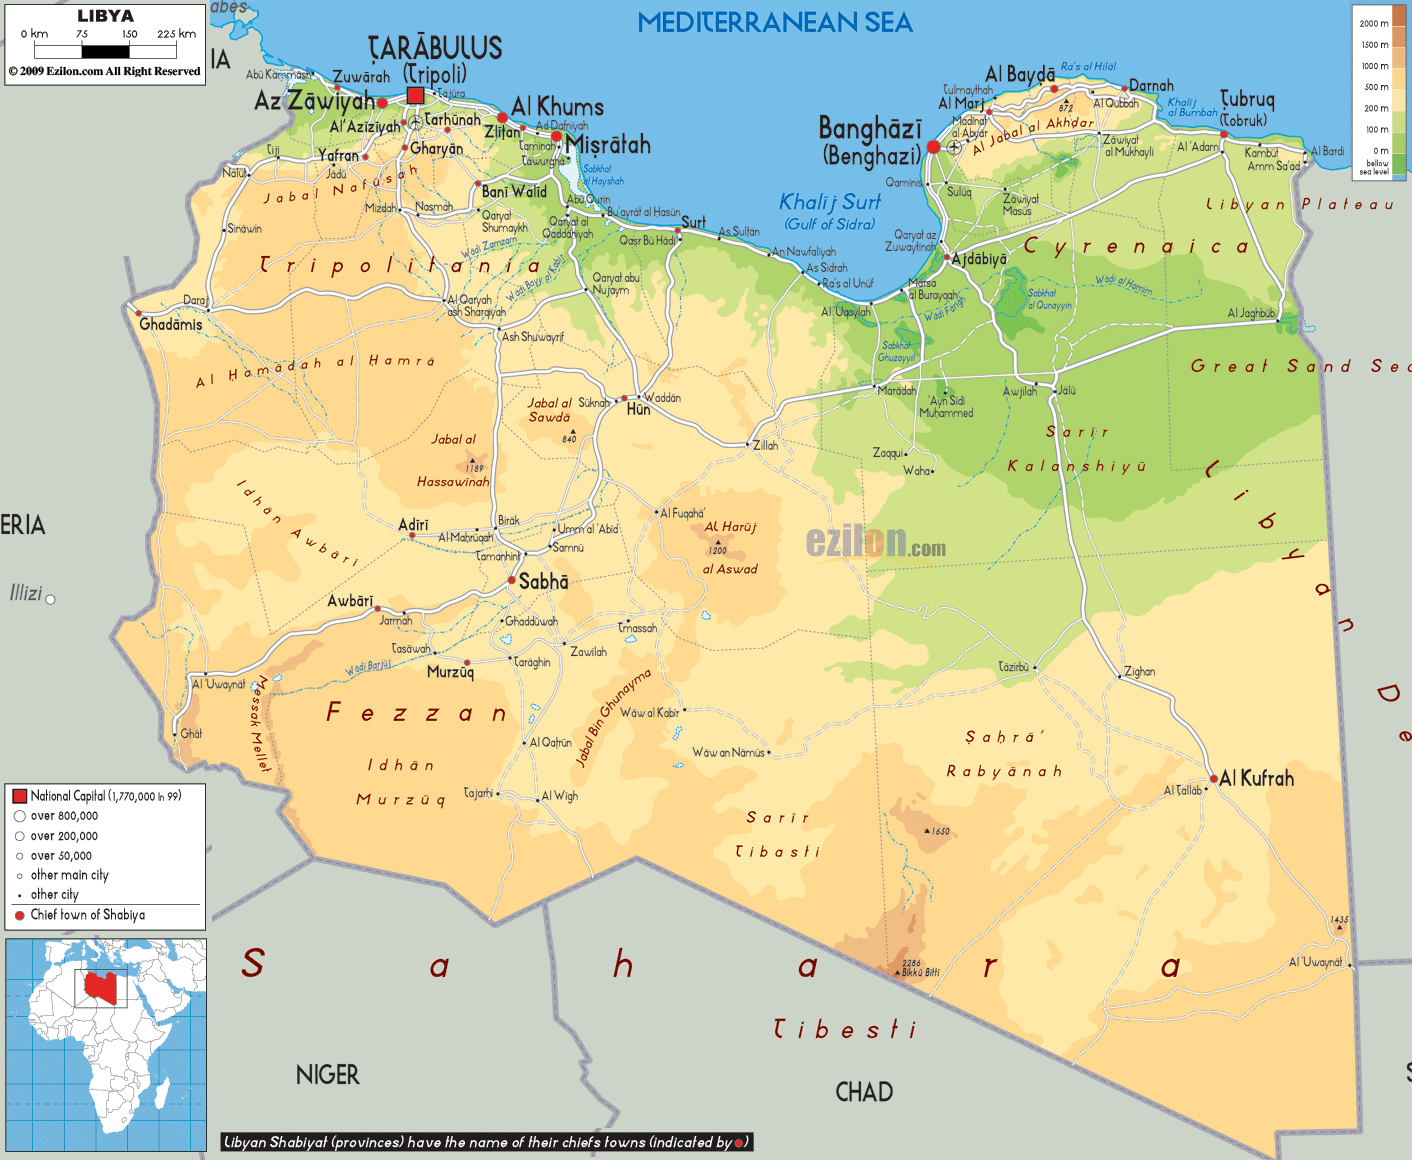 http://www.ezilon.com/maps/images/africa/Libya-physical-map.gif